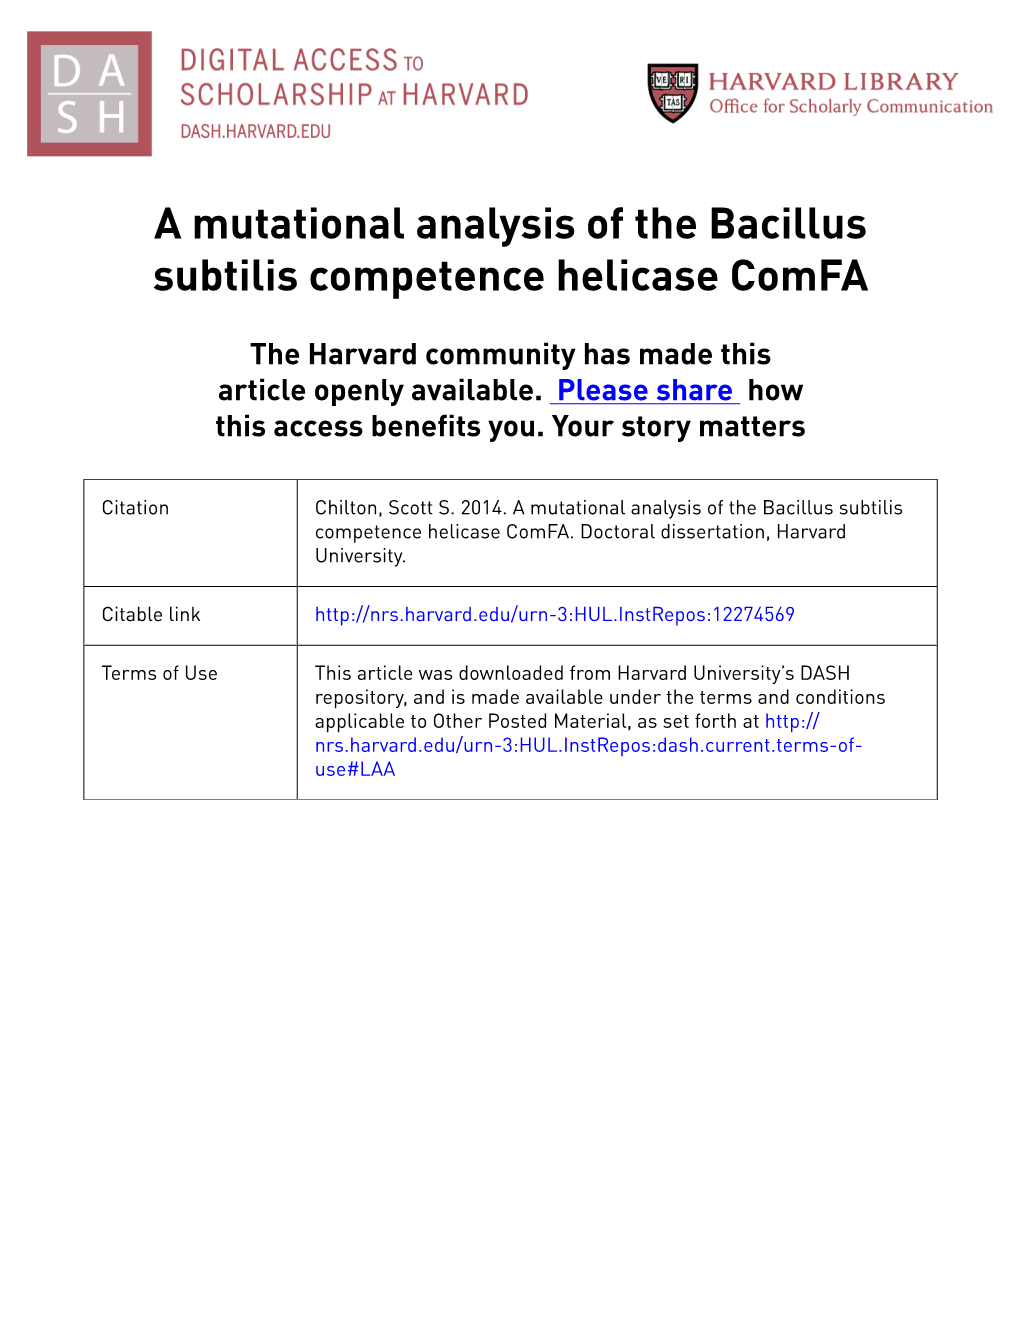 A Mutational Analysis of the Bacillus Subtilis Competence Helicase Comfa